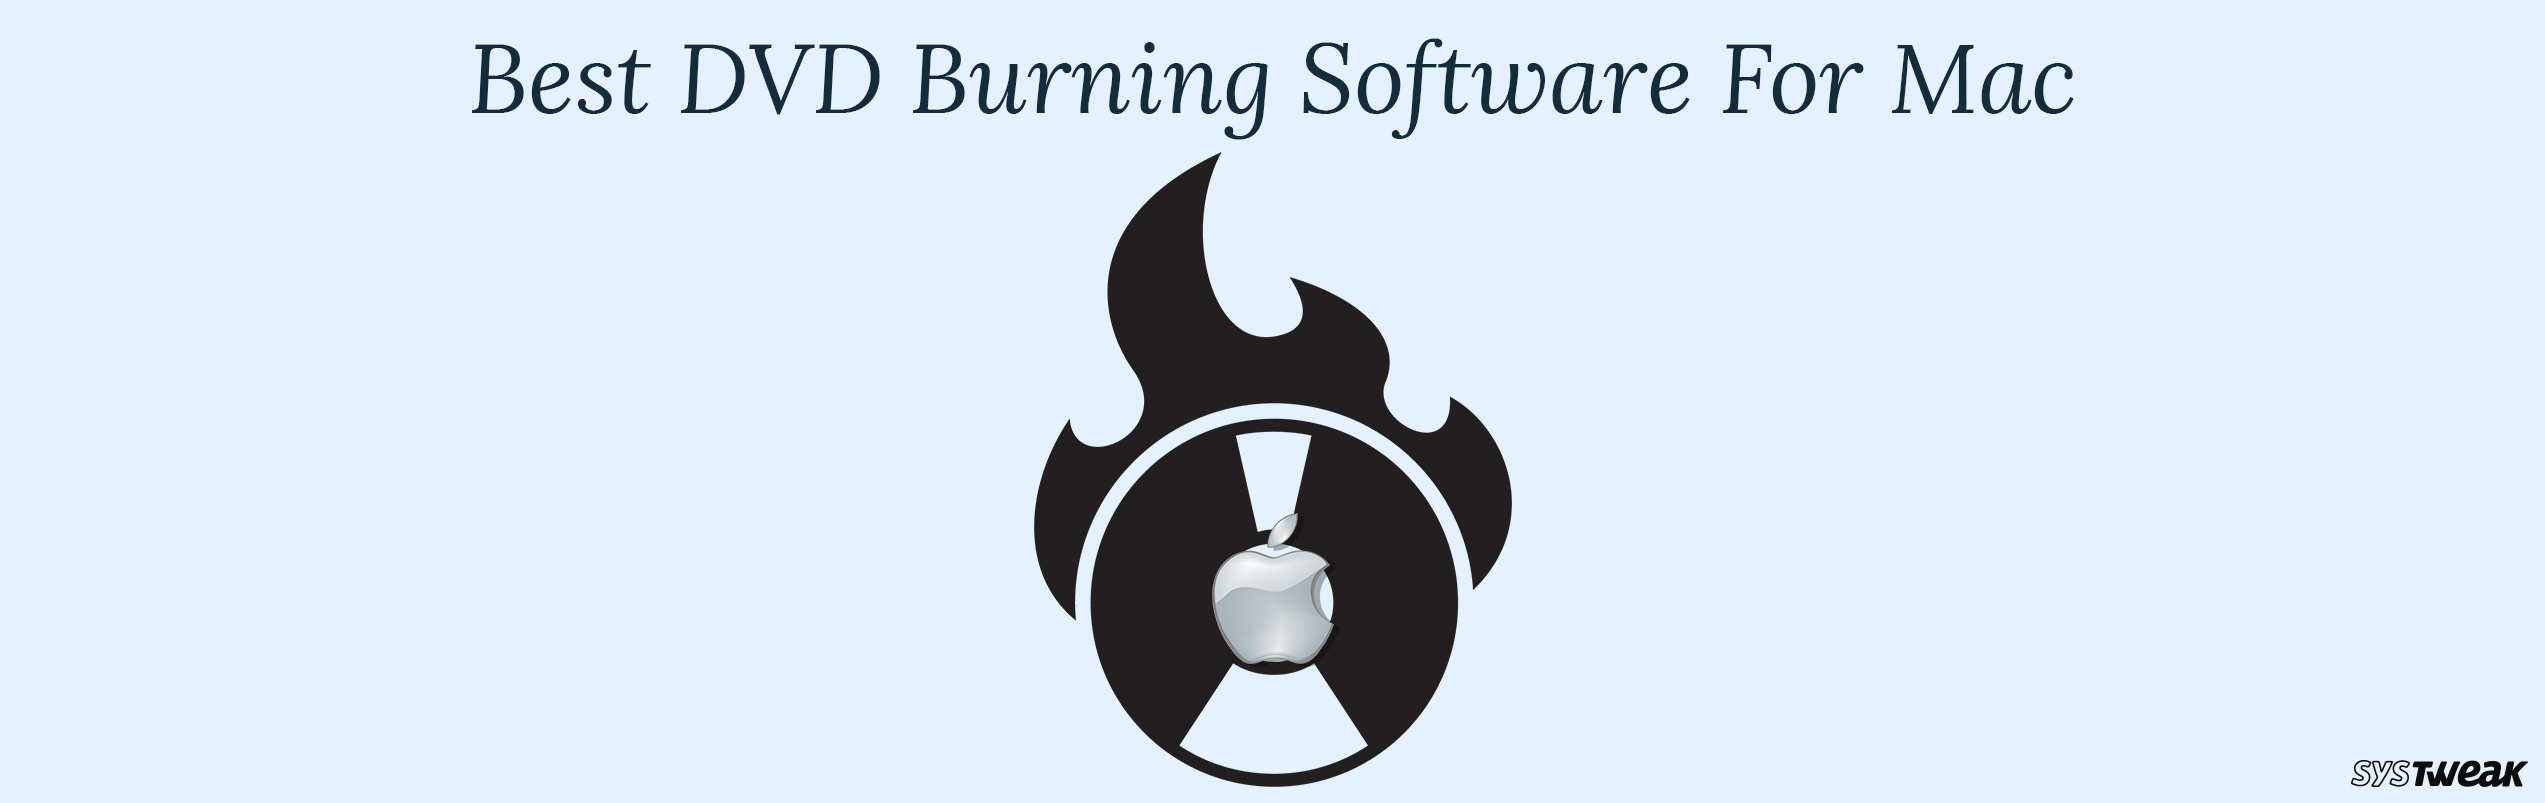 Best Dvd Burning Software For Mac 2018